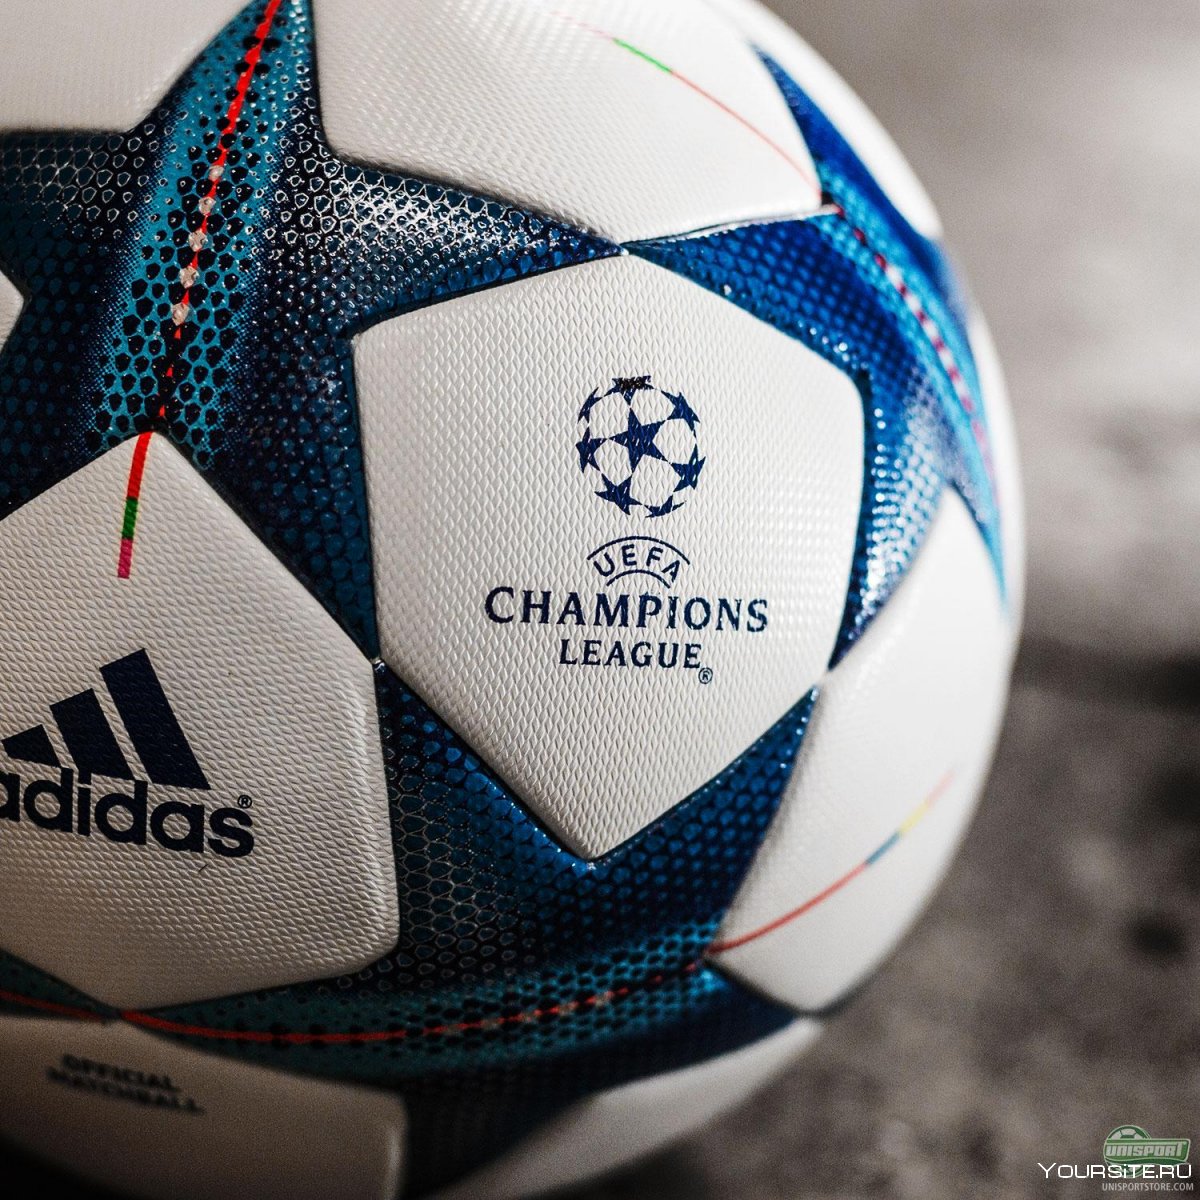 Adidas Champions League Ball